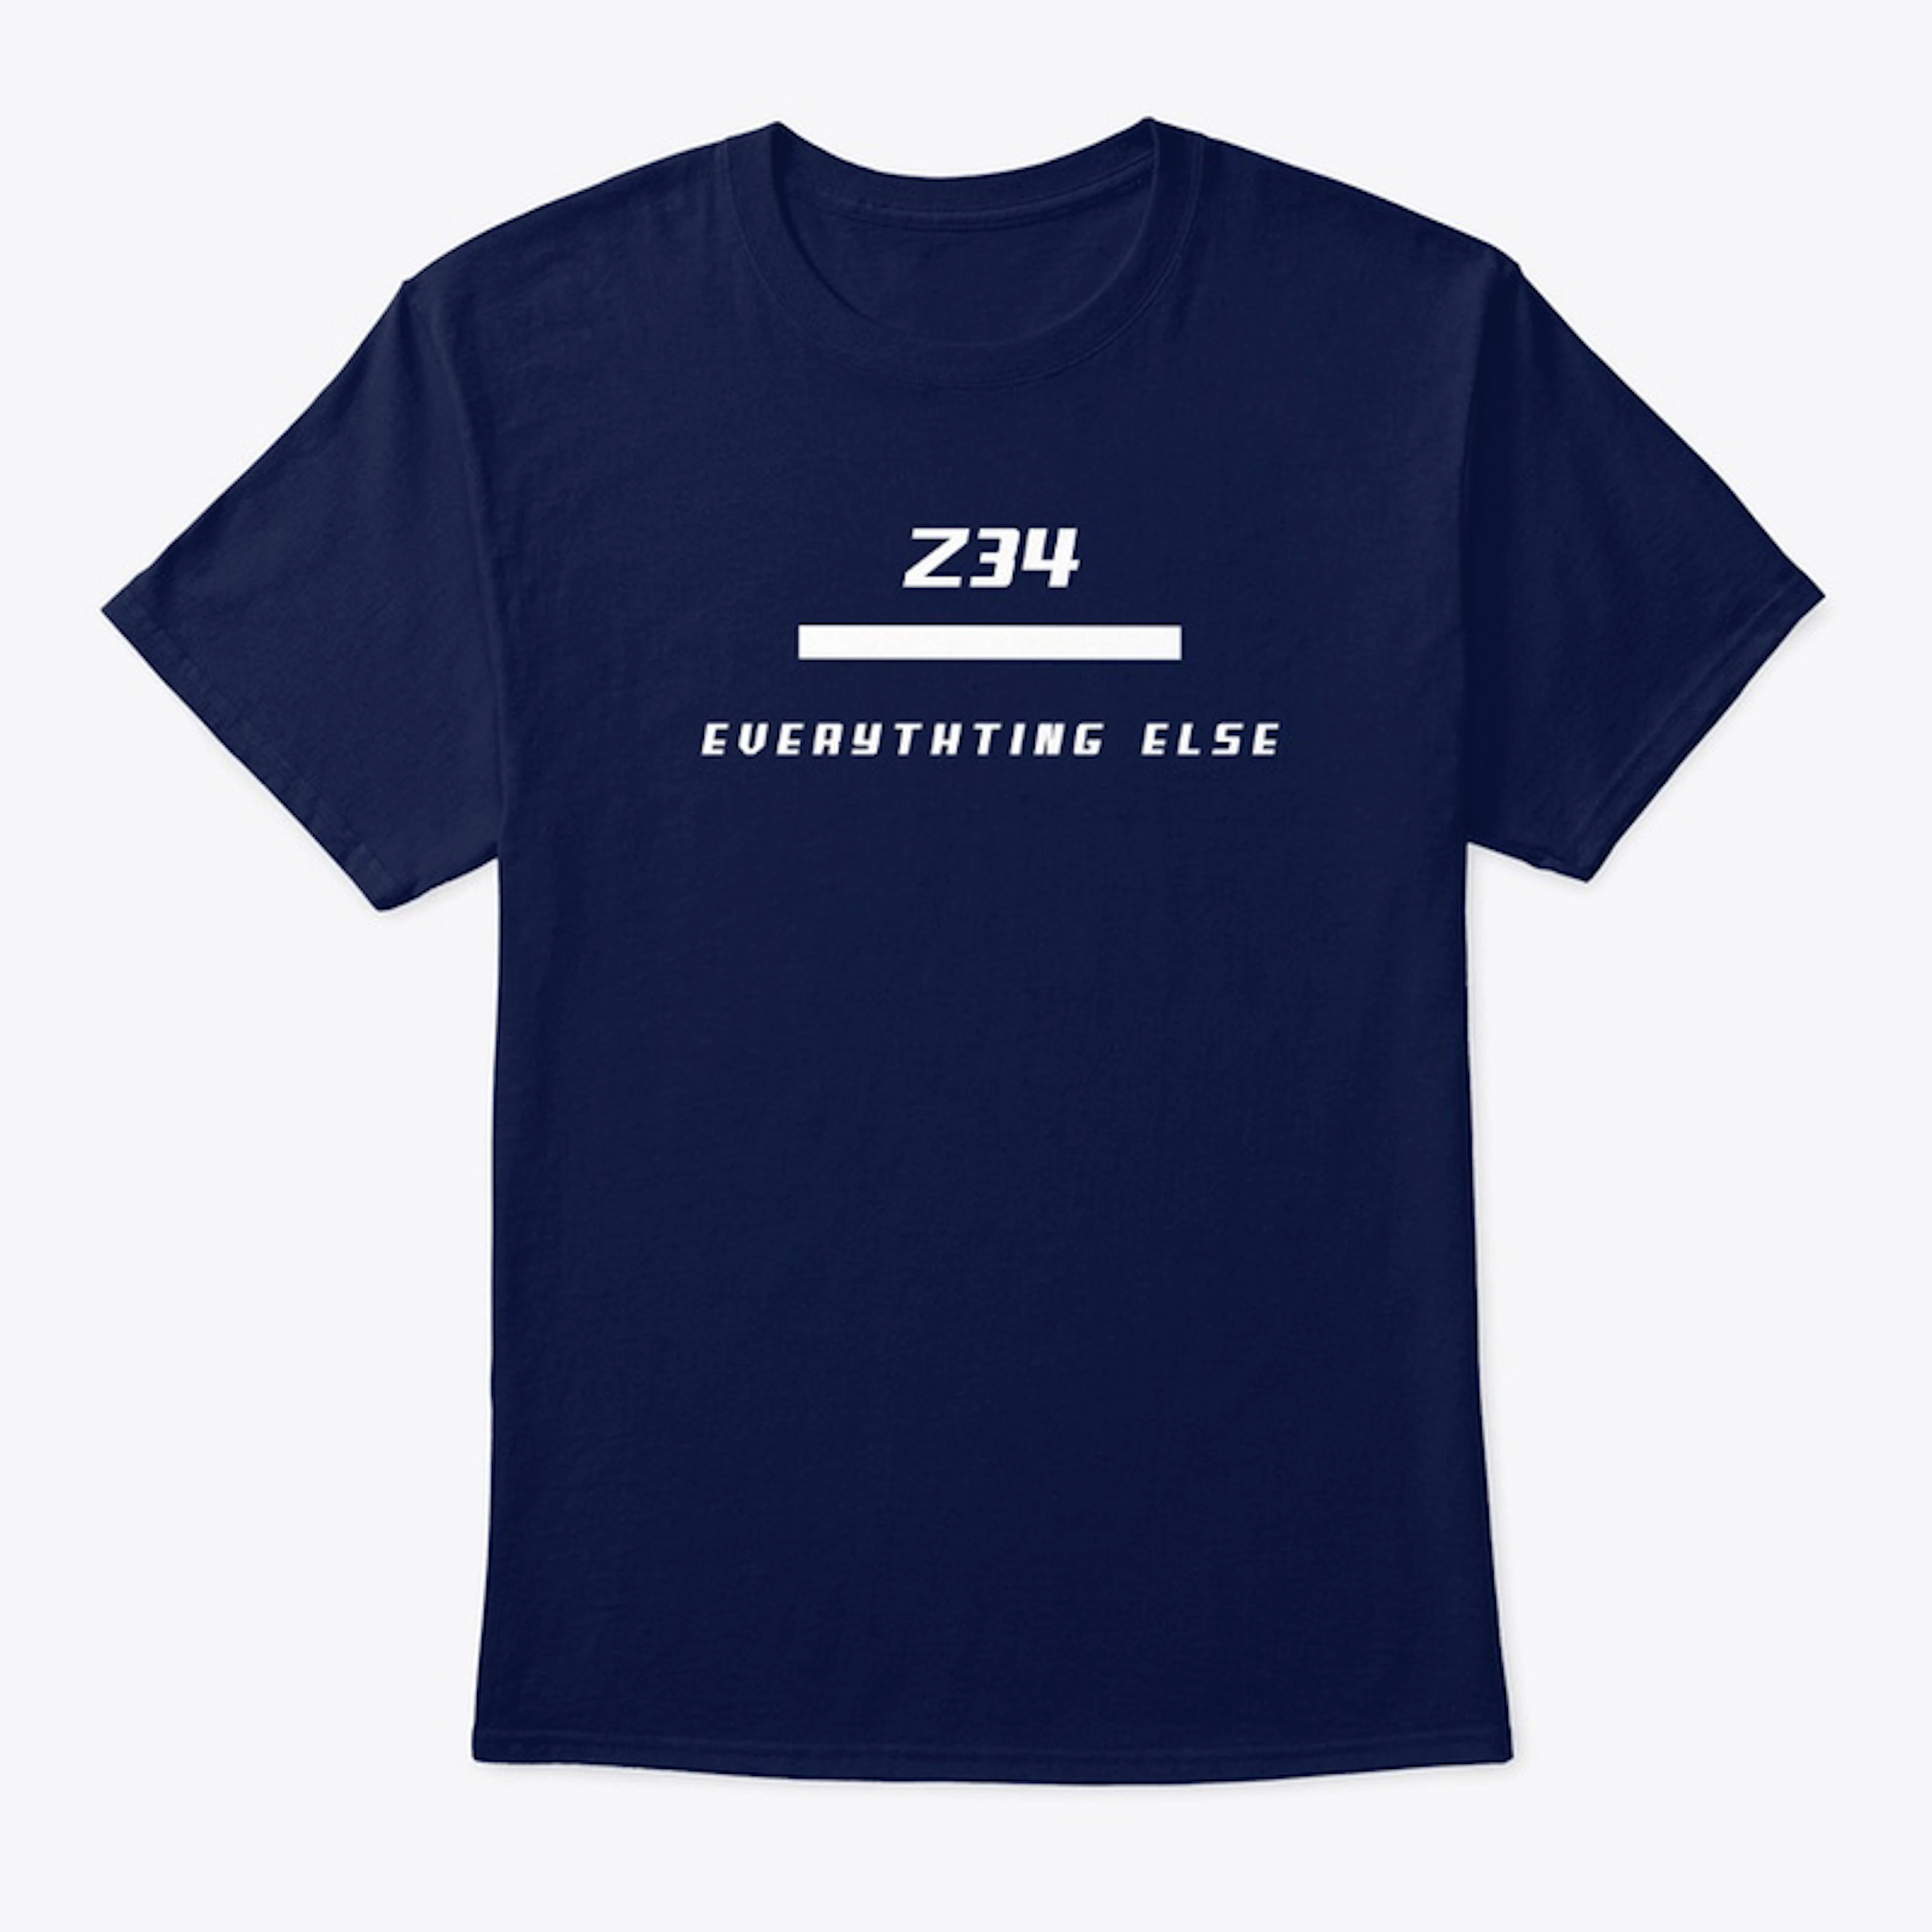 Z34 OVER EVERYTHING ELSE